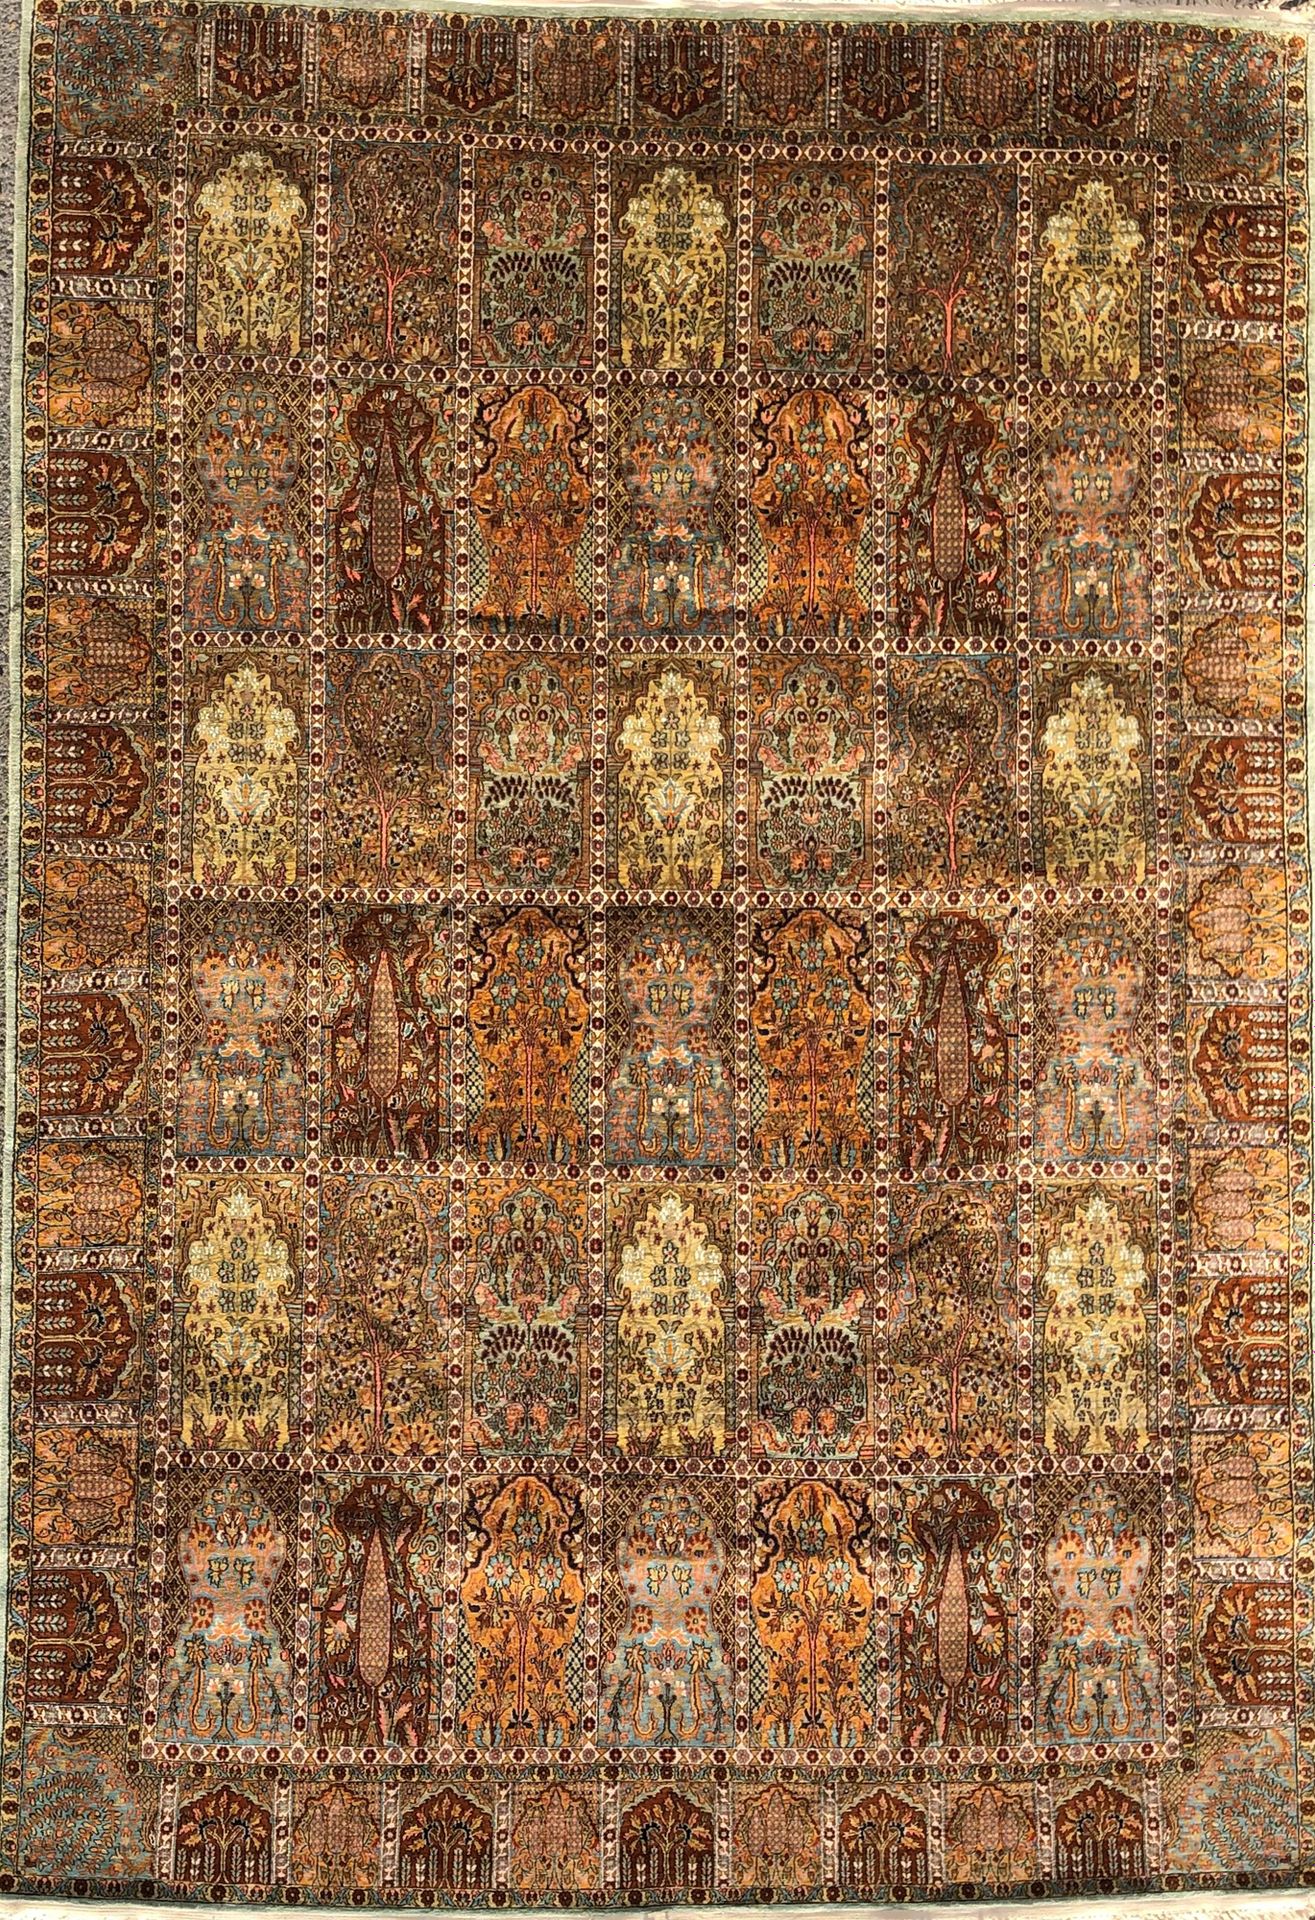 Null 哈马丹装饰的印度花园地毯，用丝绸和棉布制成，有42个方块，装饰着树木和花朵。

308 x 214 cm